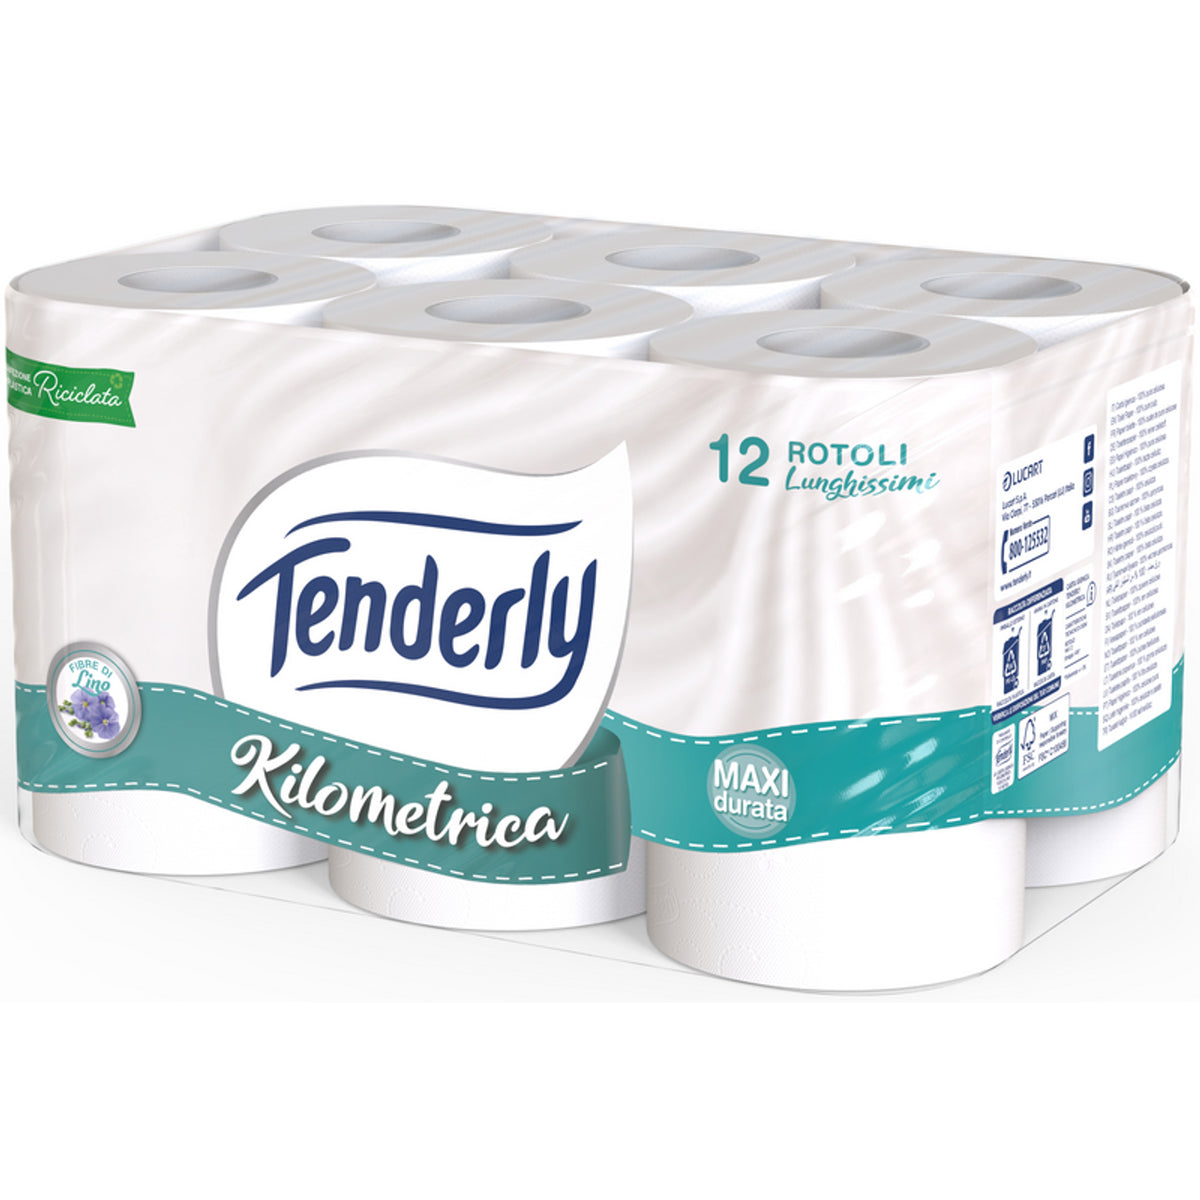 Tenderly toilet paper kilometric lino fiber 12 rolls